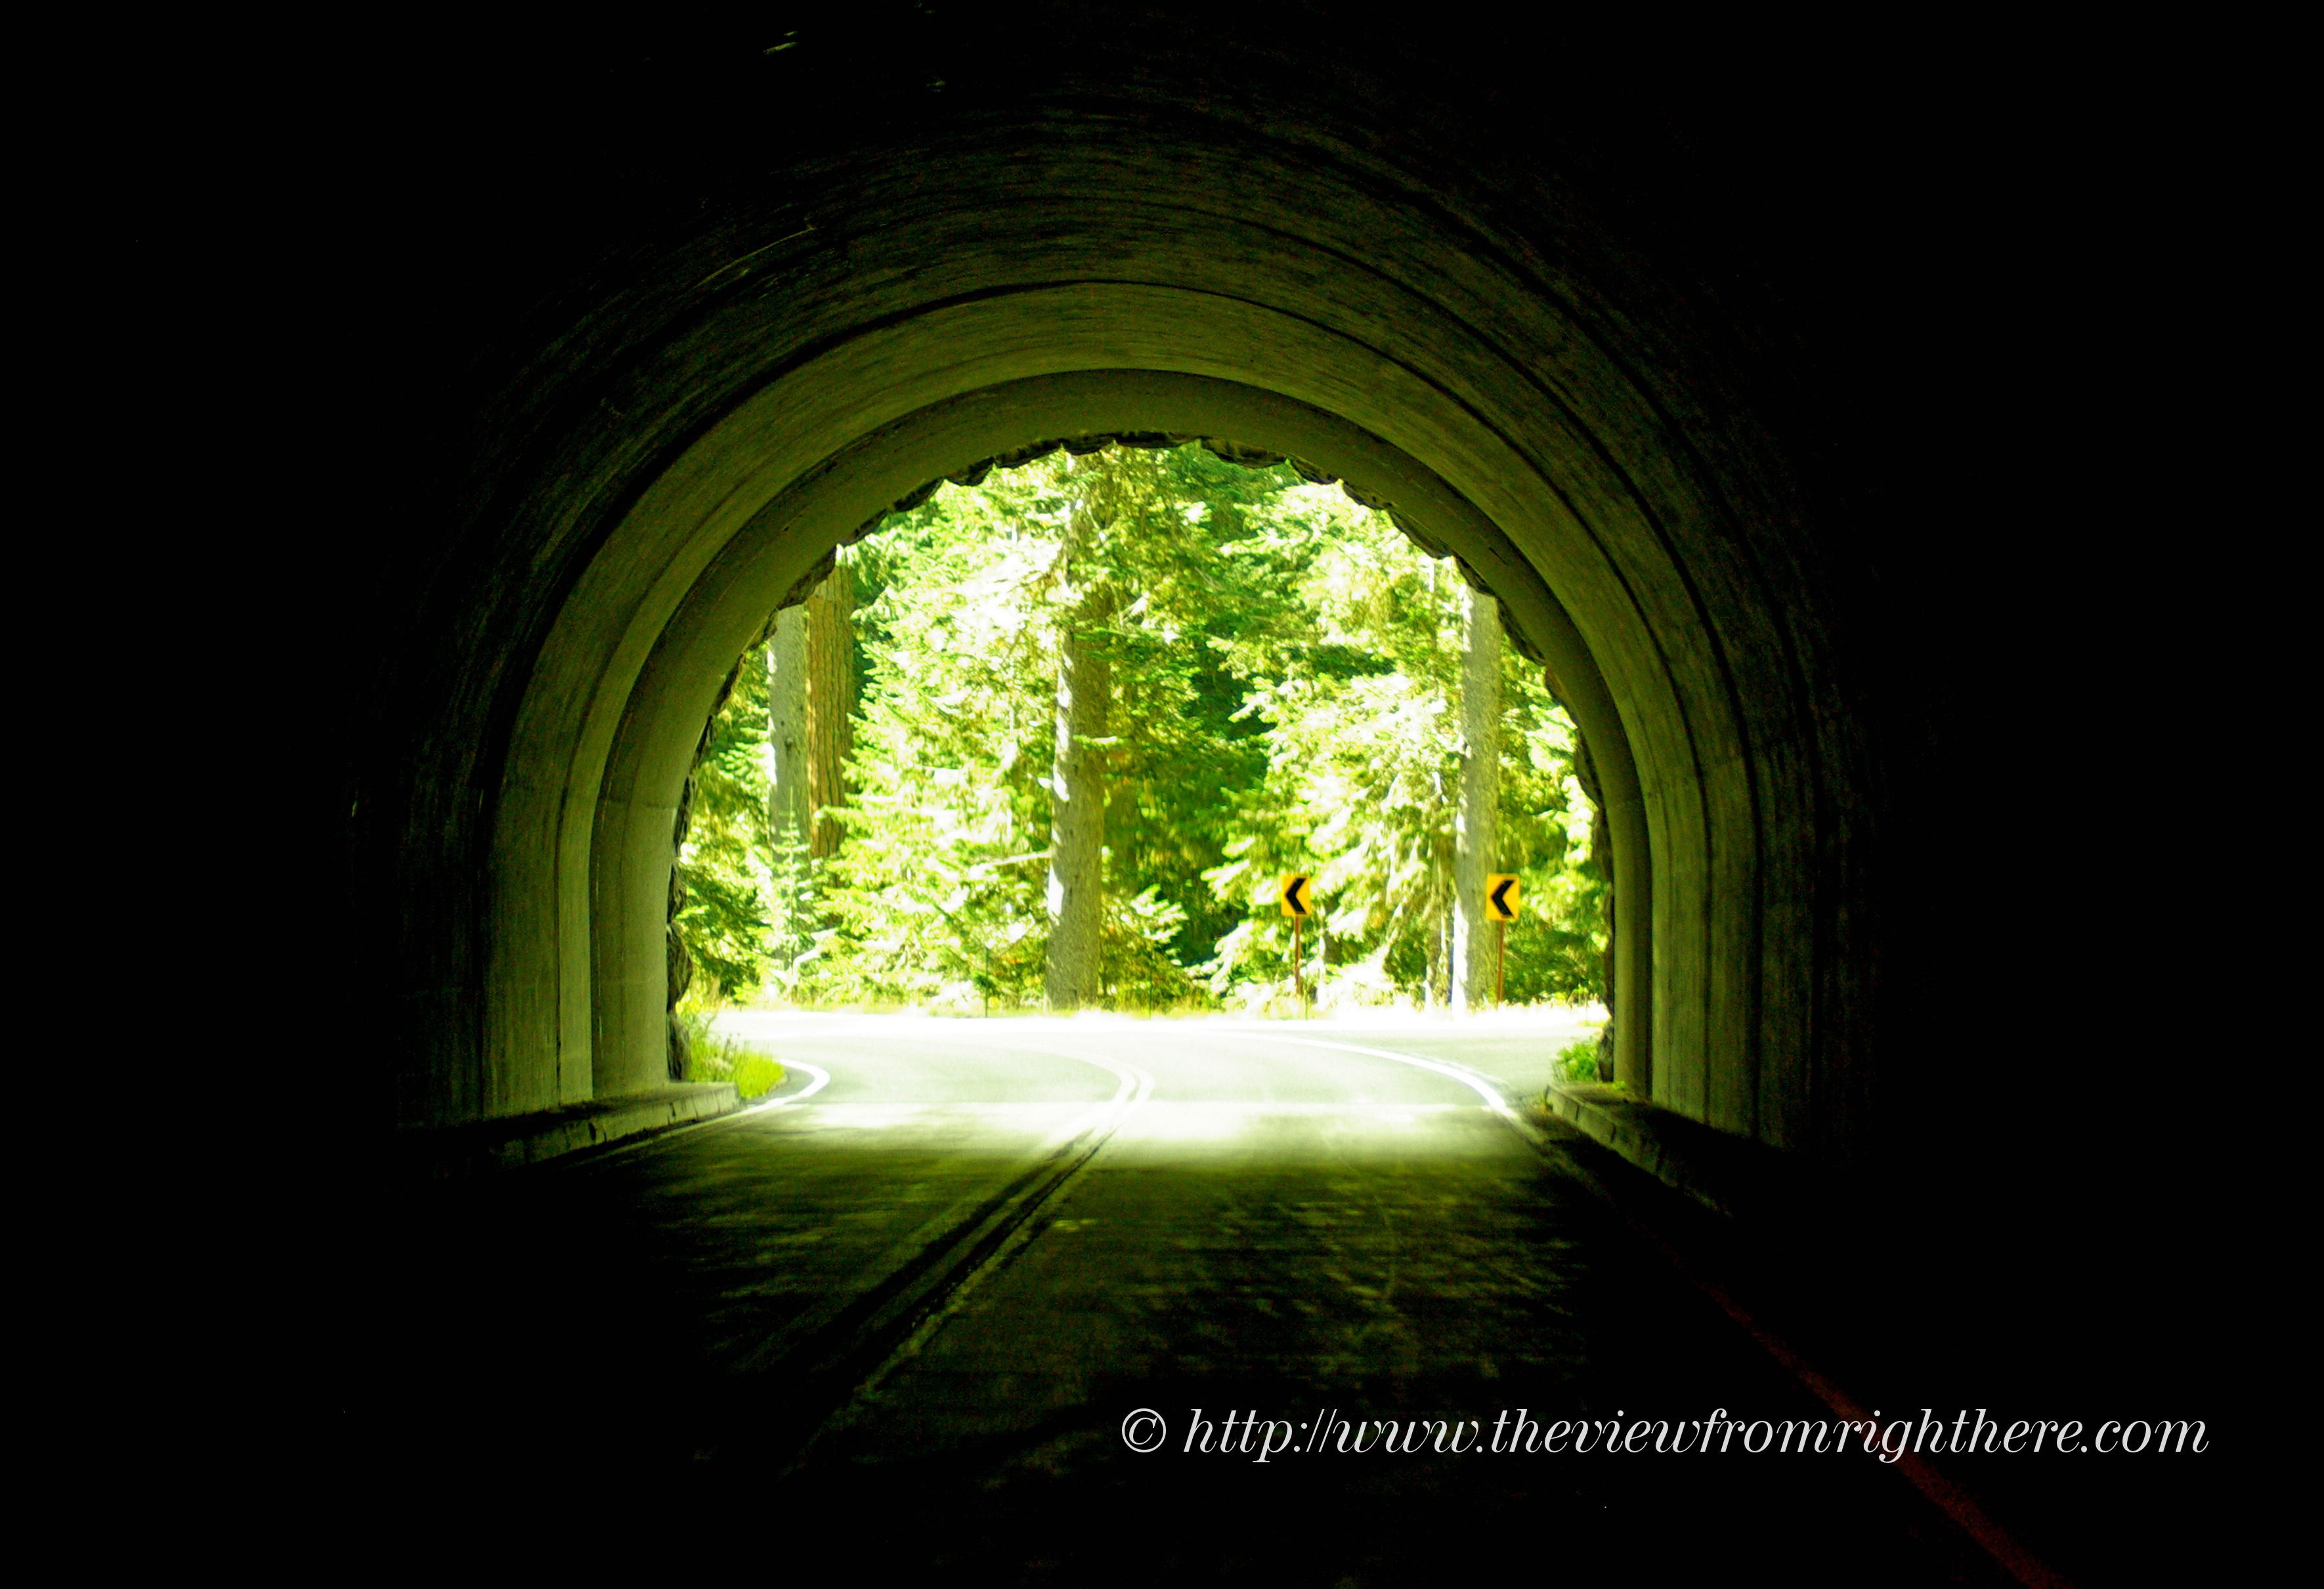 White Pass Tunnel – Highway 12